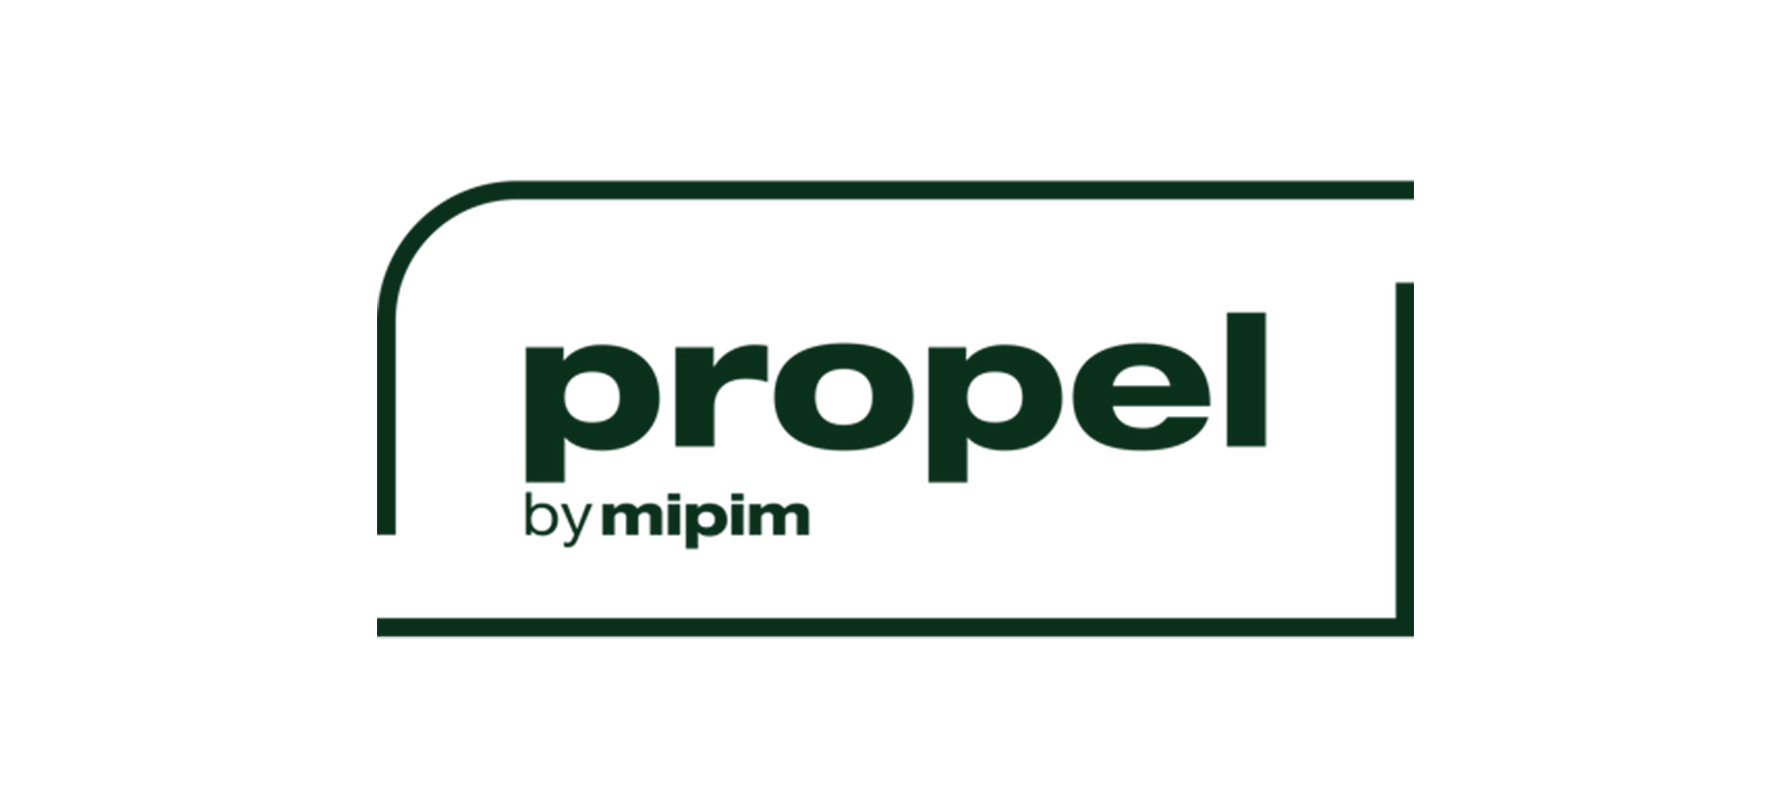 Propel Mipim logo